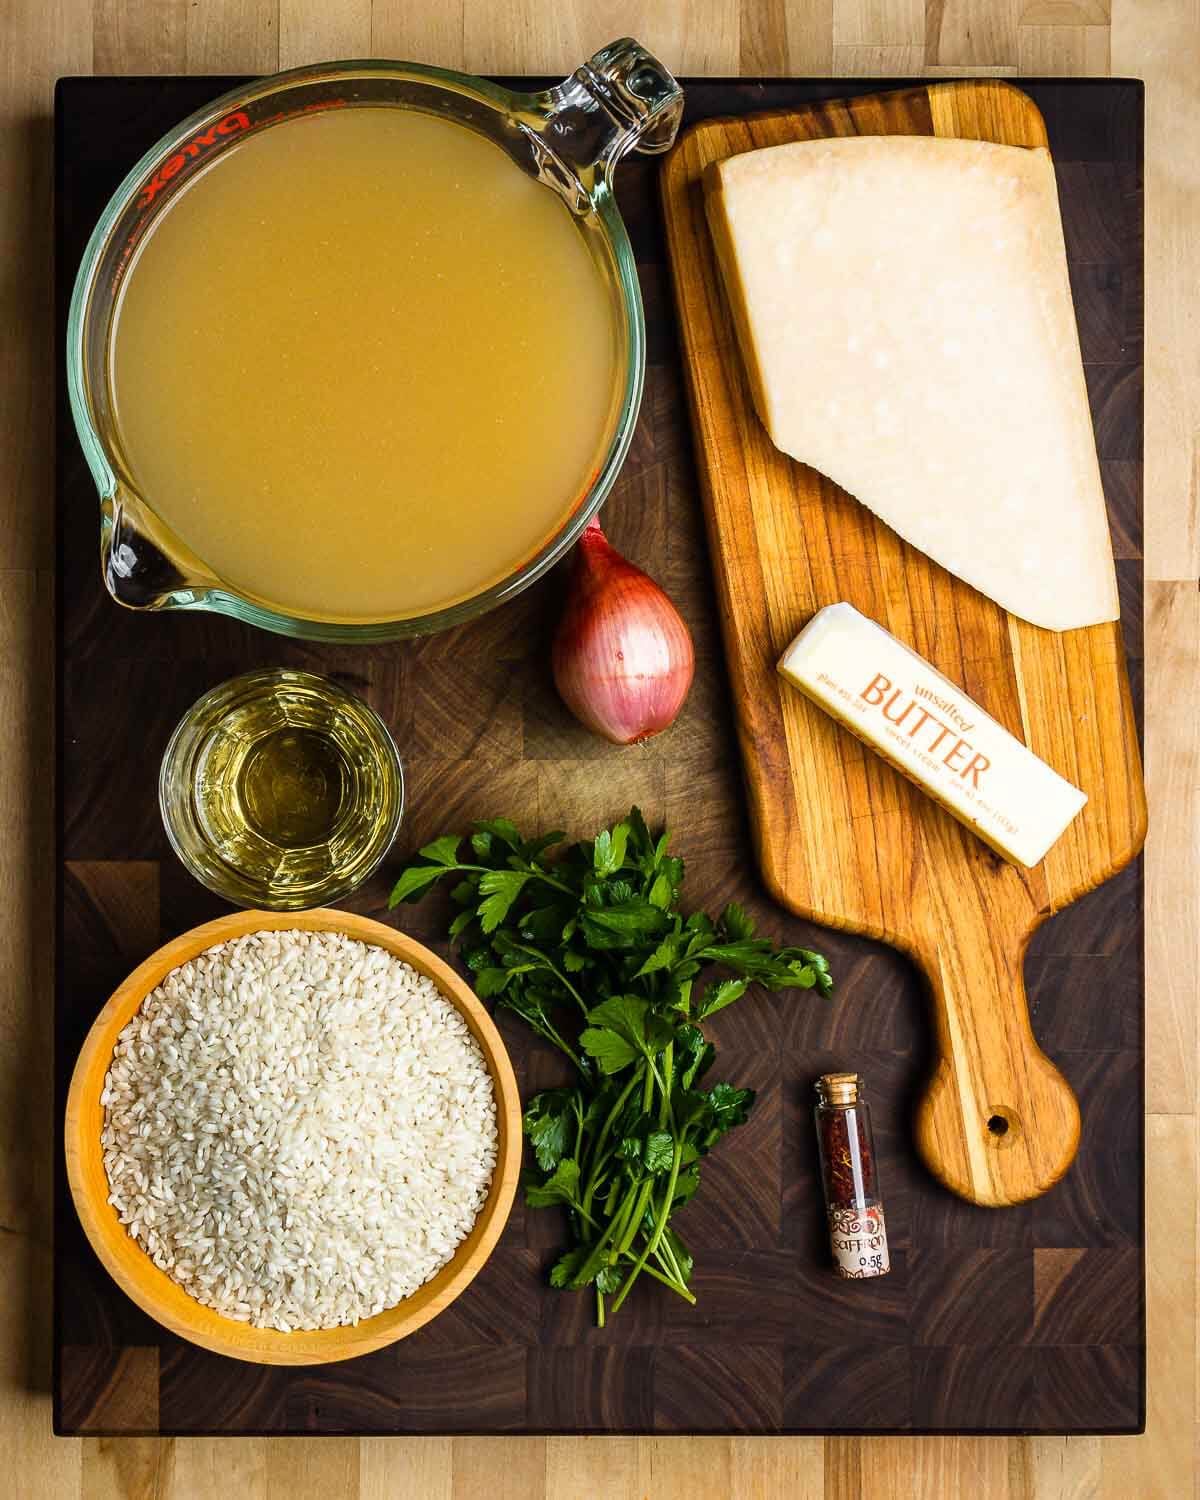 Ingredients shown: low-sodium chicken stock, Parmigiano Reggiano, shallot, white wine, butter, carnaroli rice, parsley, and saffron.